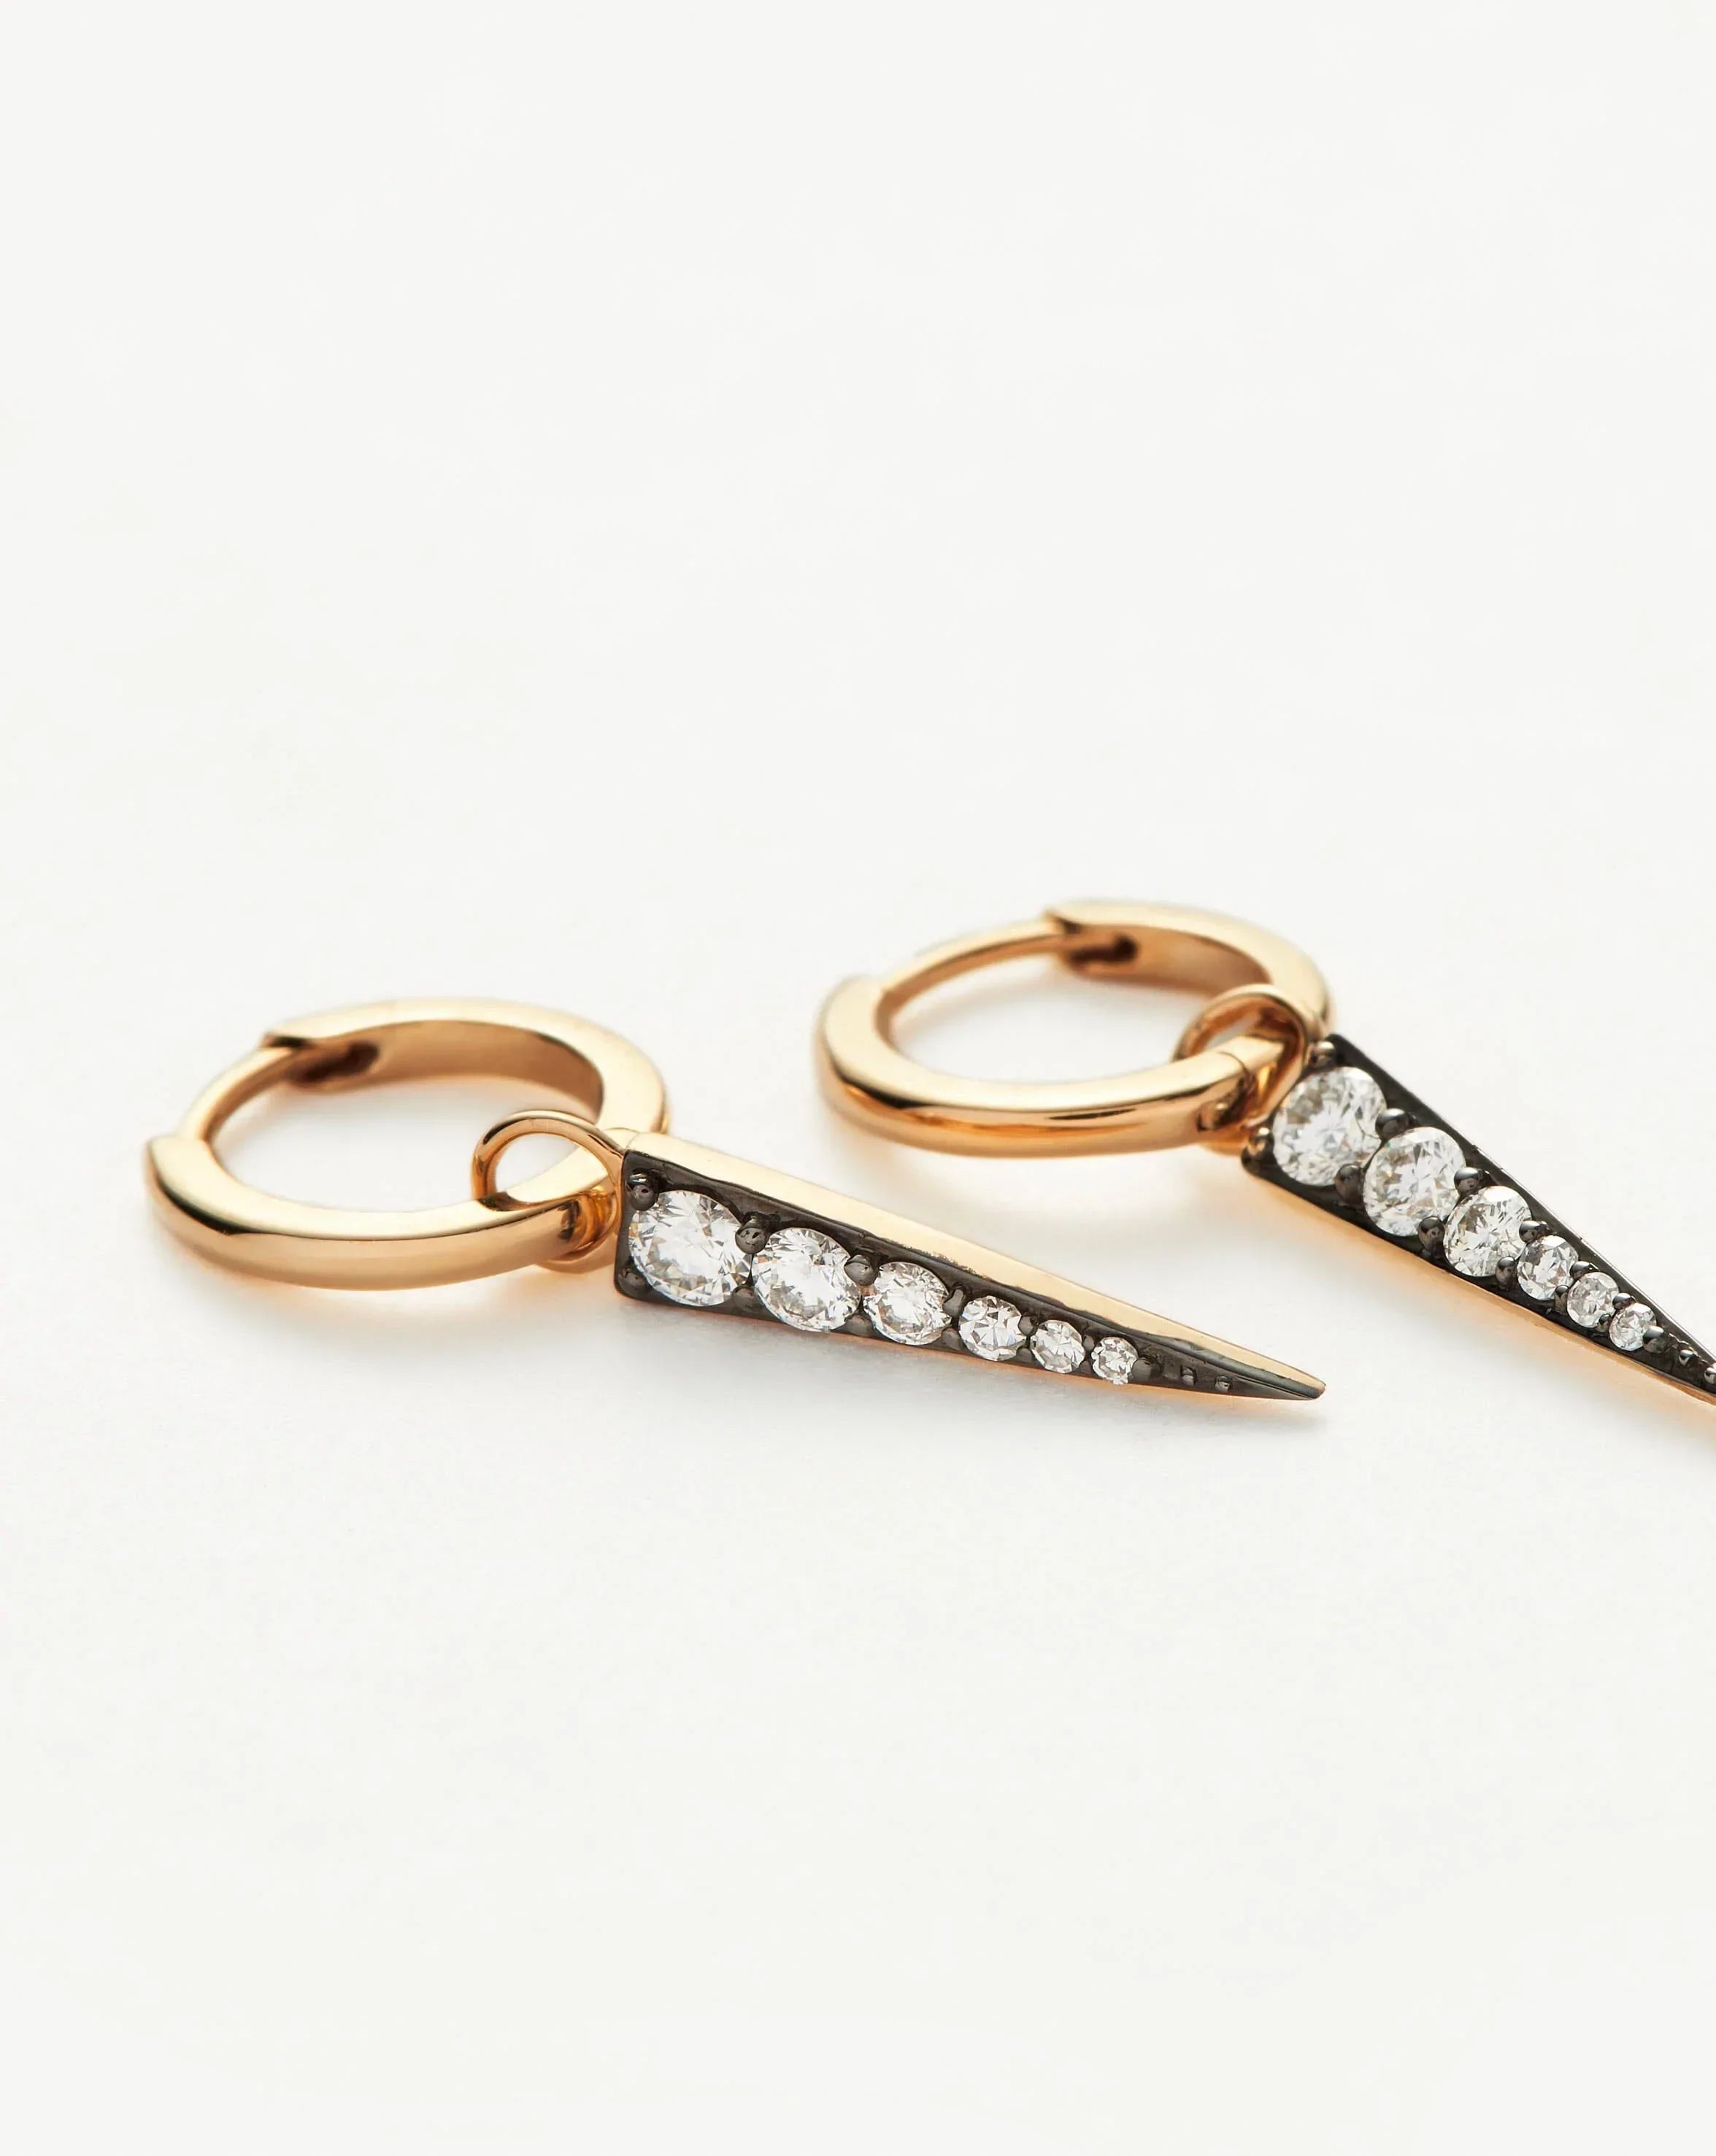 Diamonds, Gemstones, Enamel, Mini Charms Pendants for Earring, Clasp in 14K  Gold